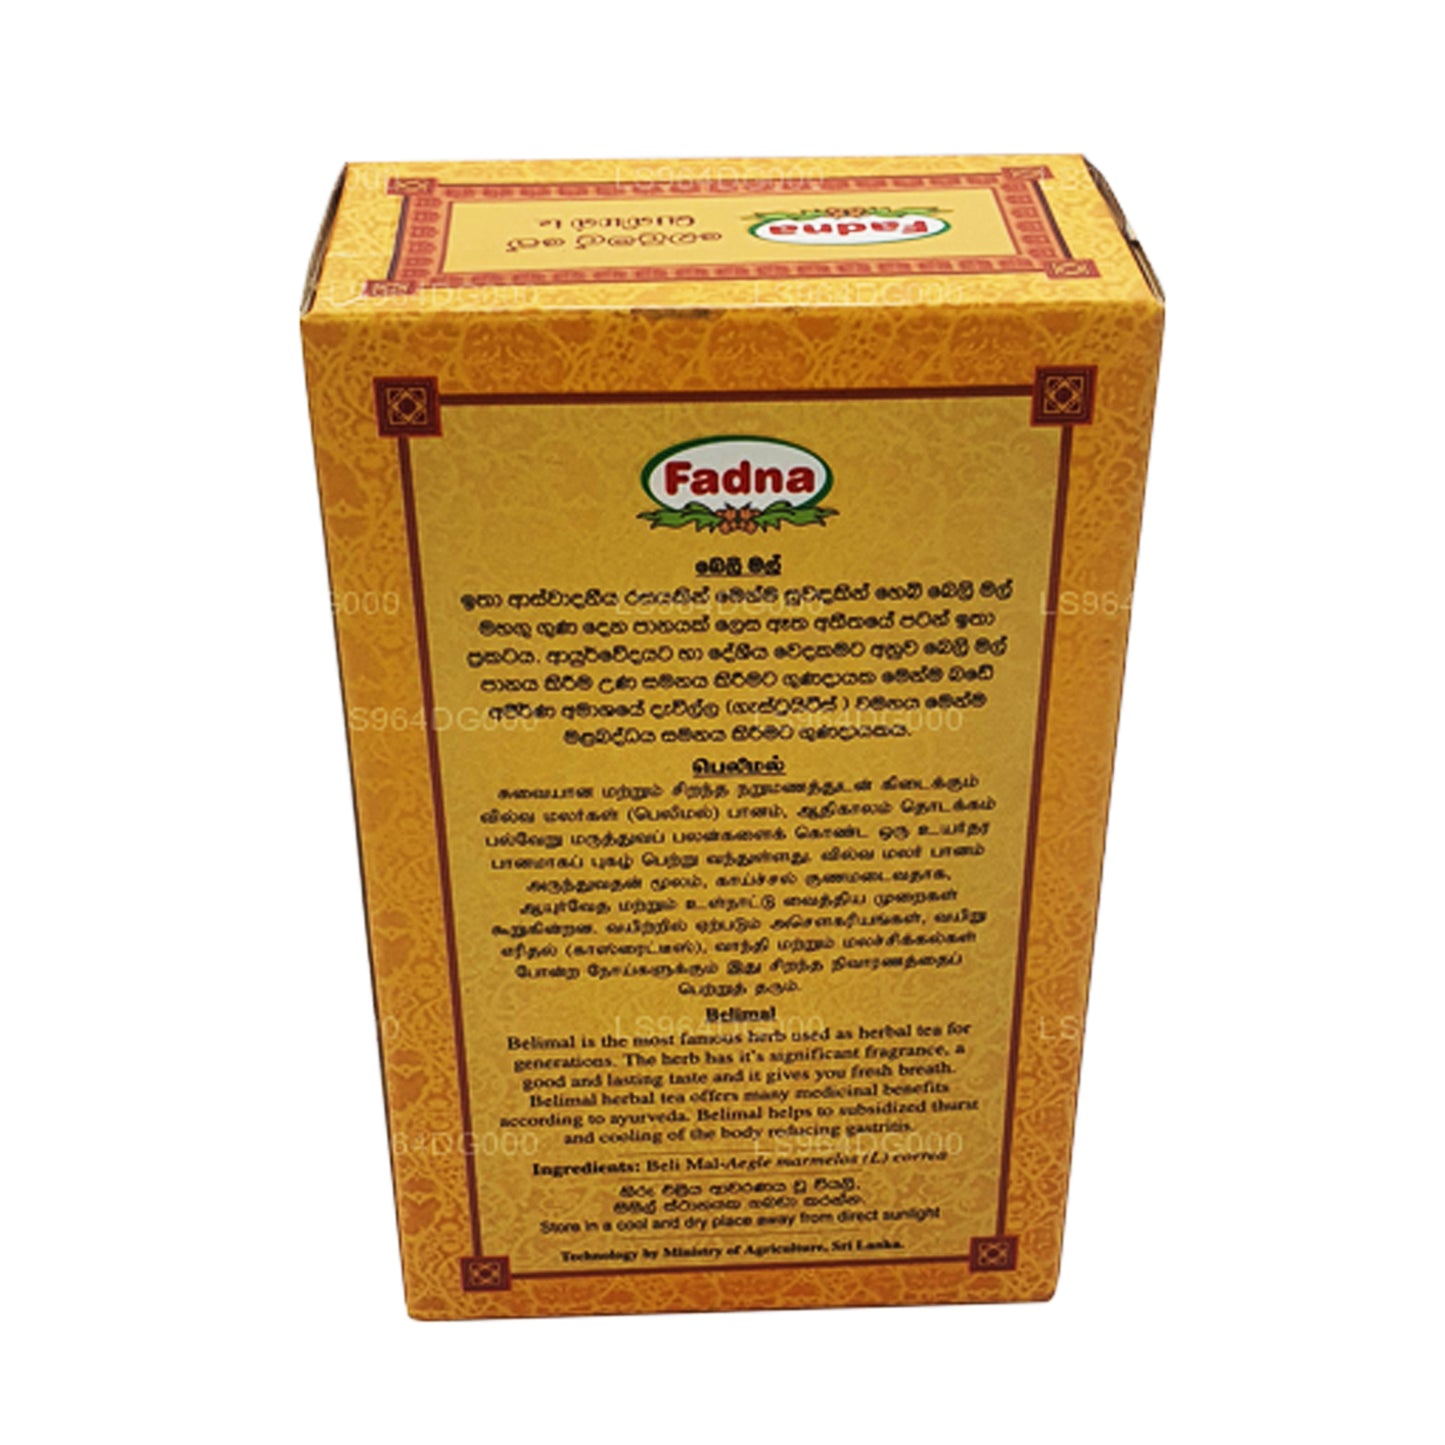 Fadna Belimal Herbal Tea (20g) 10 Tea Bags